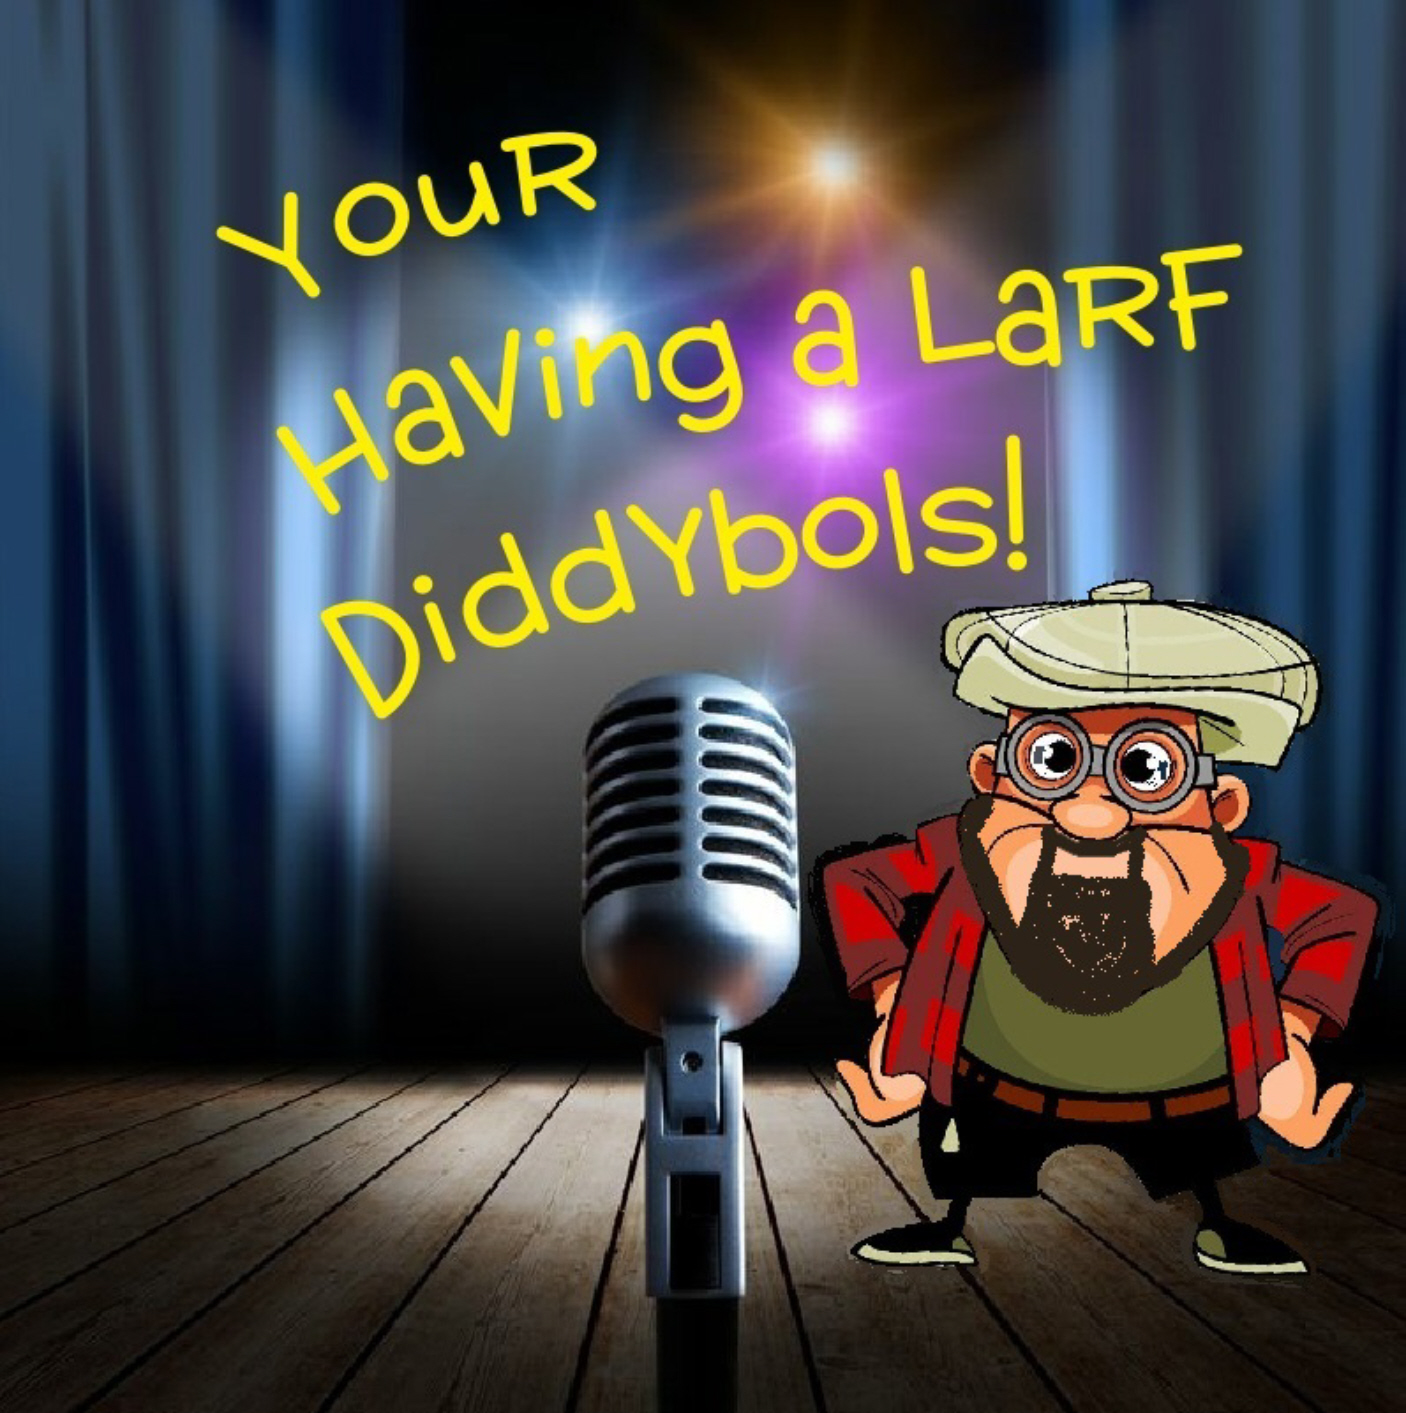 Diddybols Podcast Number One